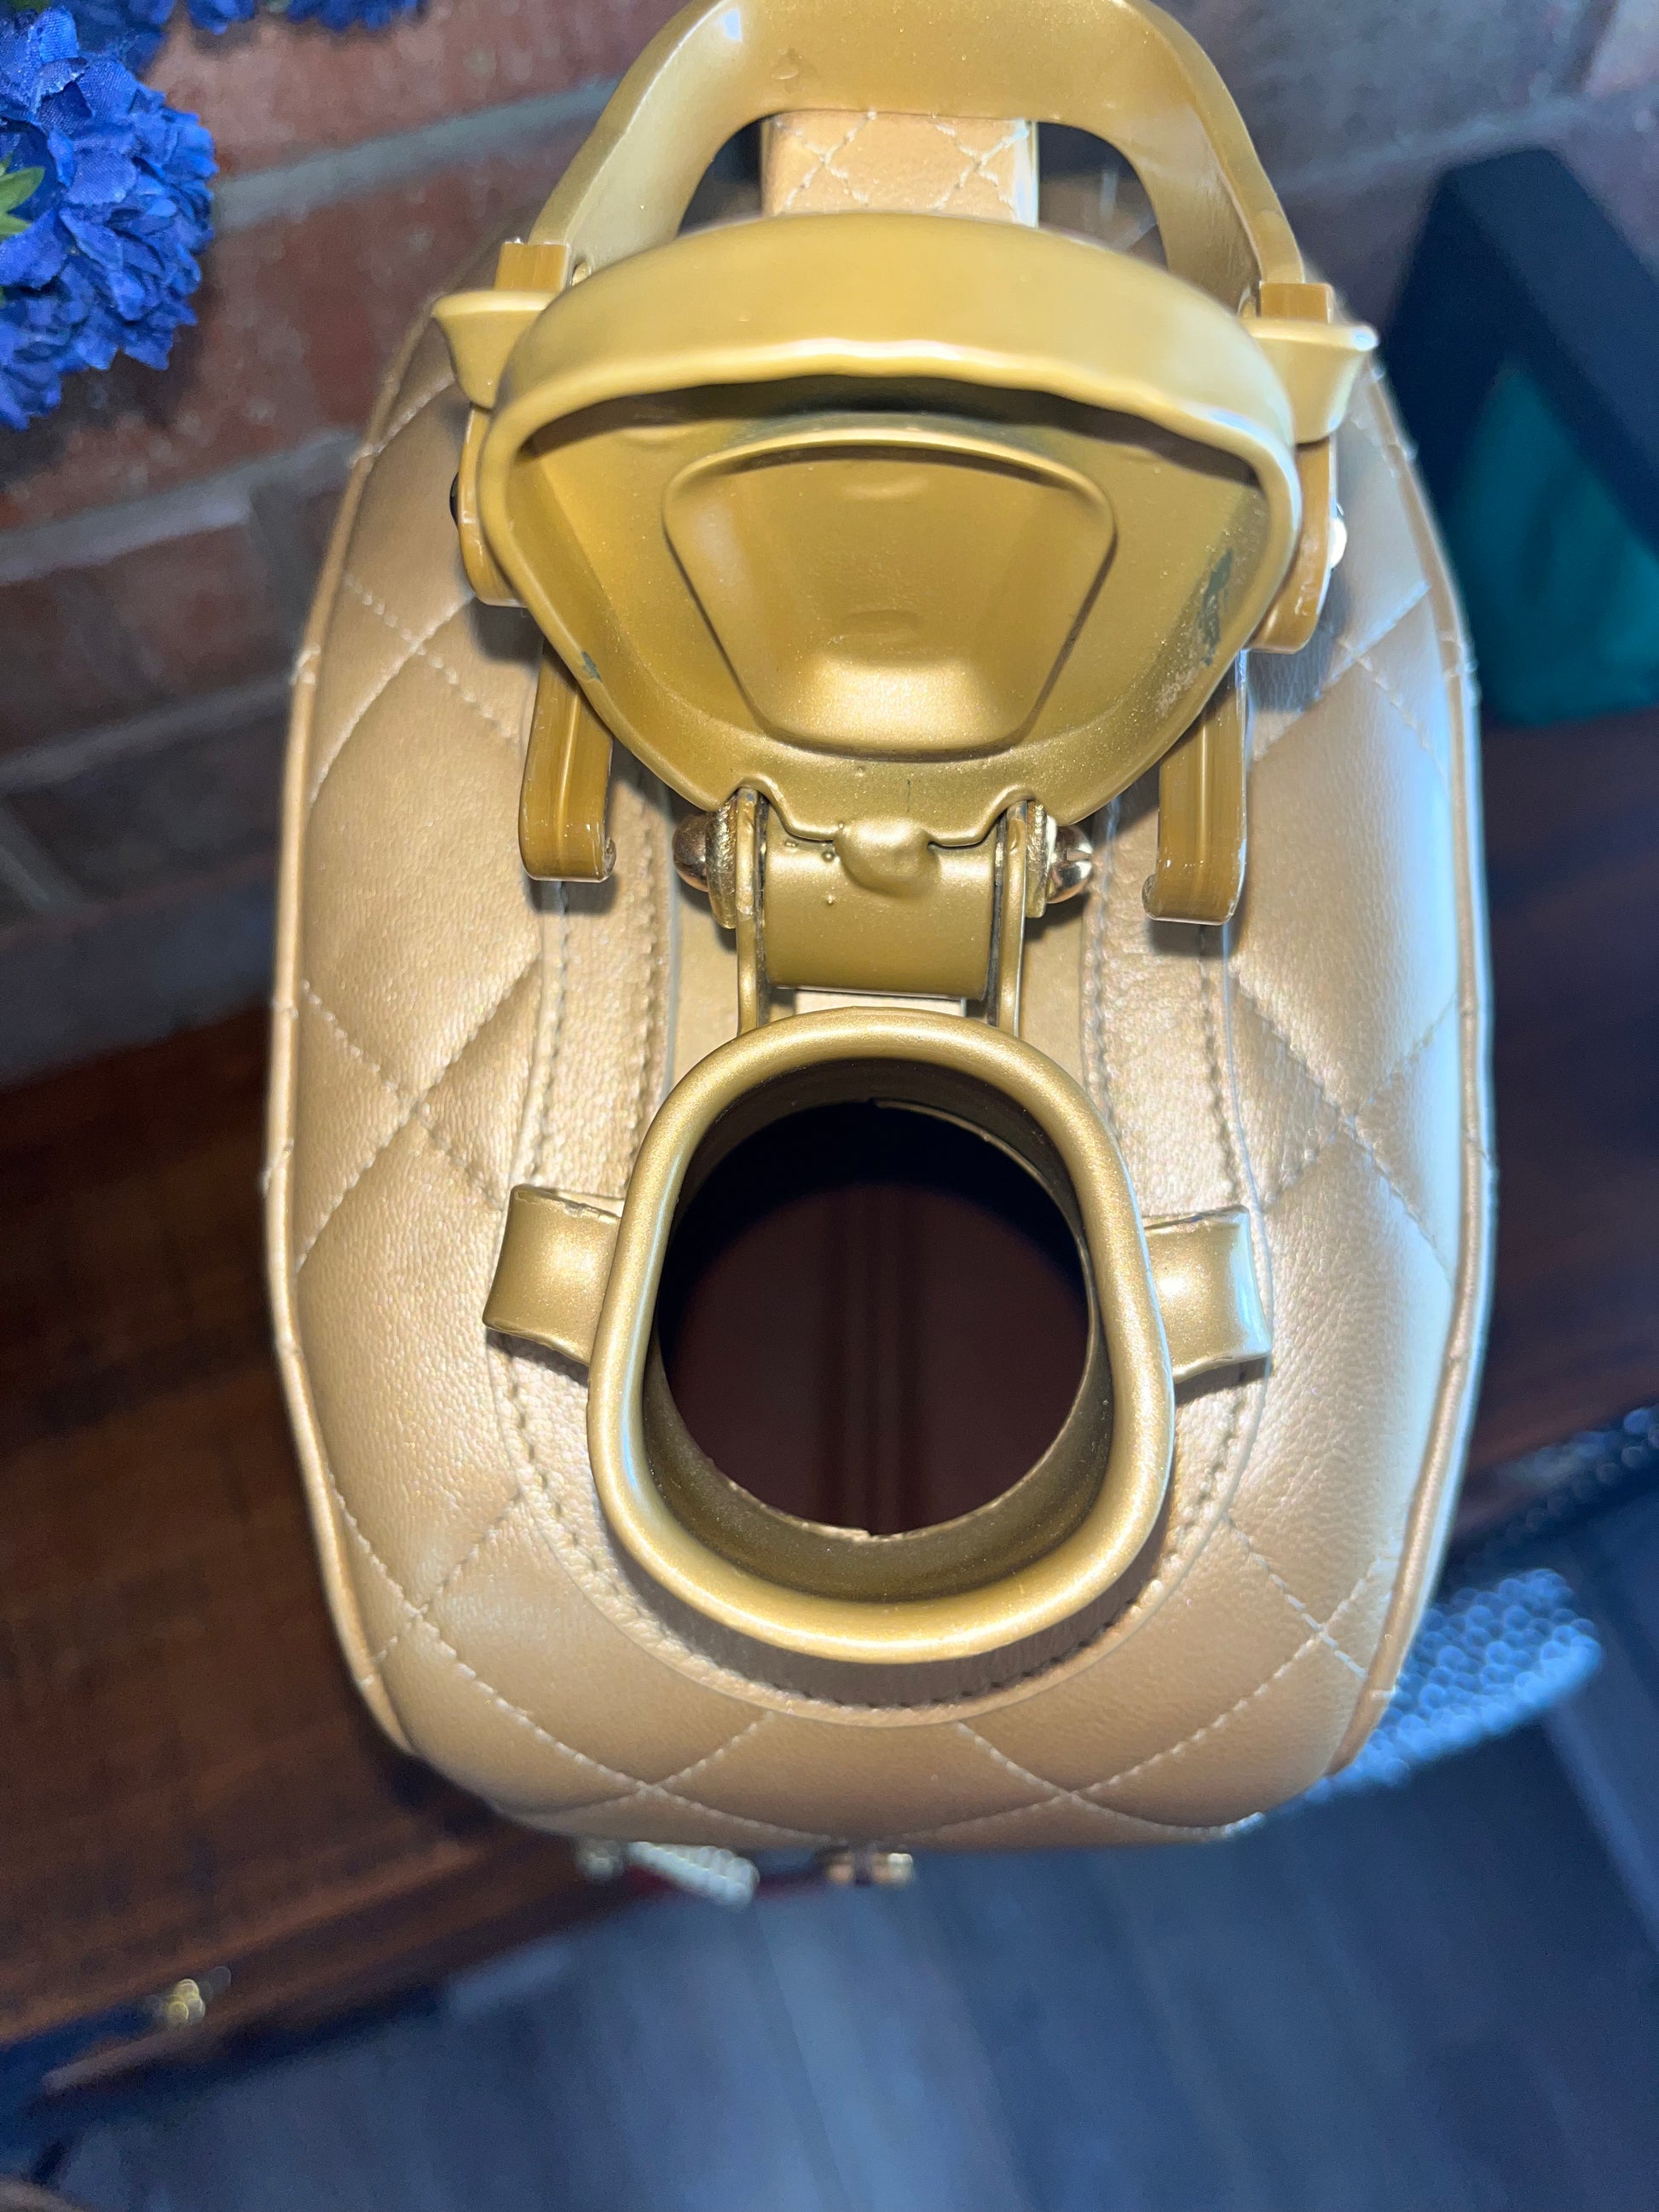 Chanel 2015 Paris Dubai Night Gas Tank Jerry Can Statement Bag Collector's  Item